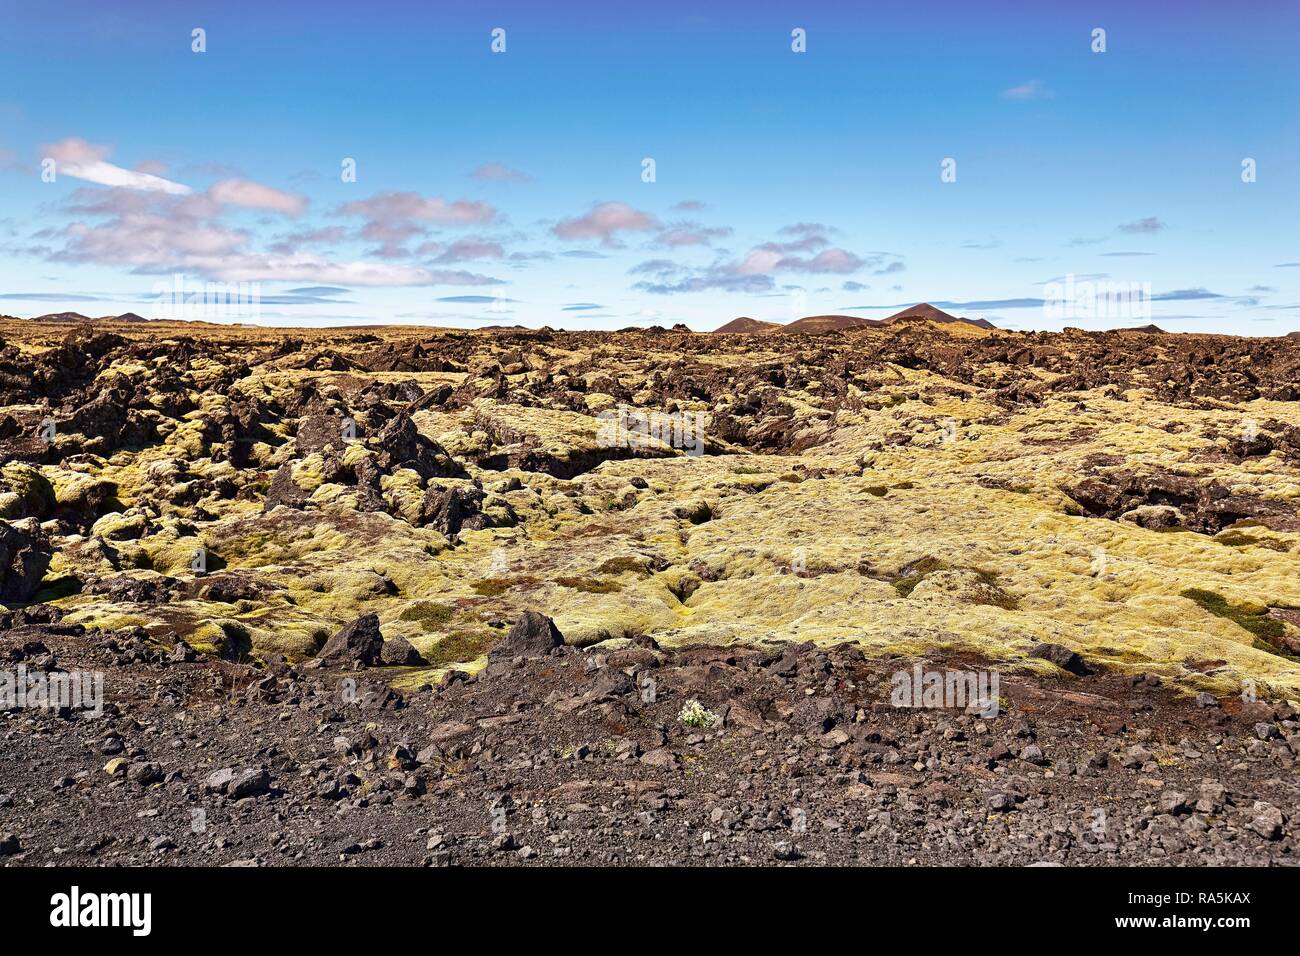 Iceland moss (Cetraria islandica) on lava rocks, Hopsnes, peninsula Reykjanes, near Reykjavik, Iceland Stock Photo